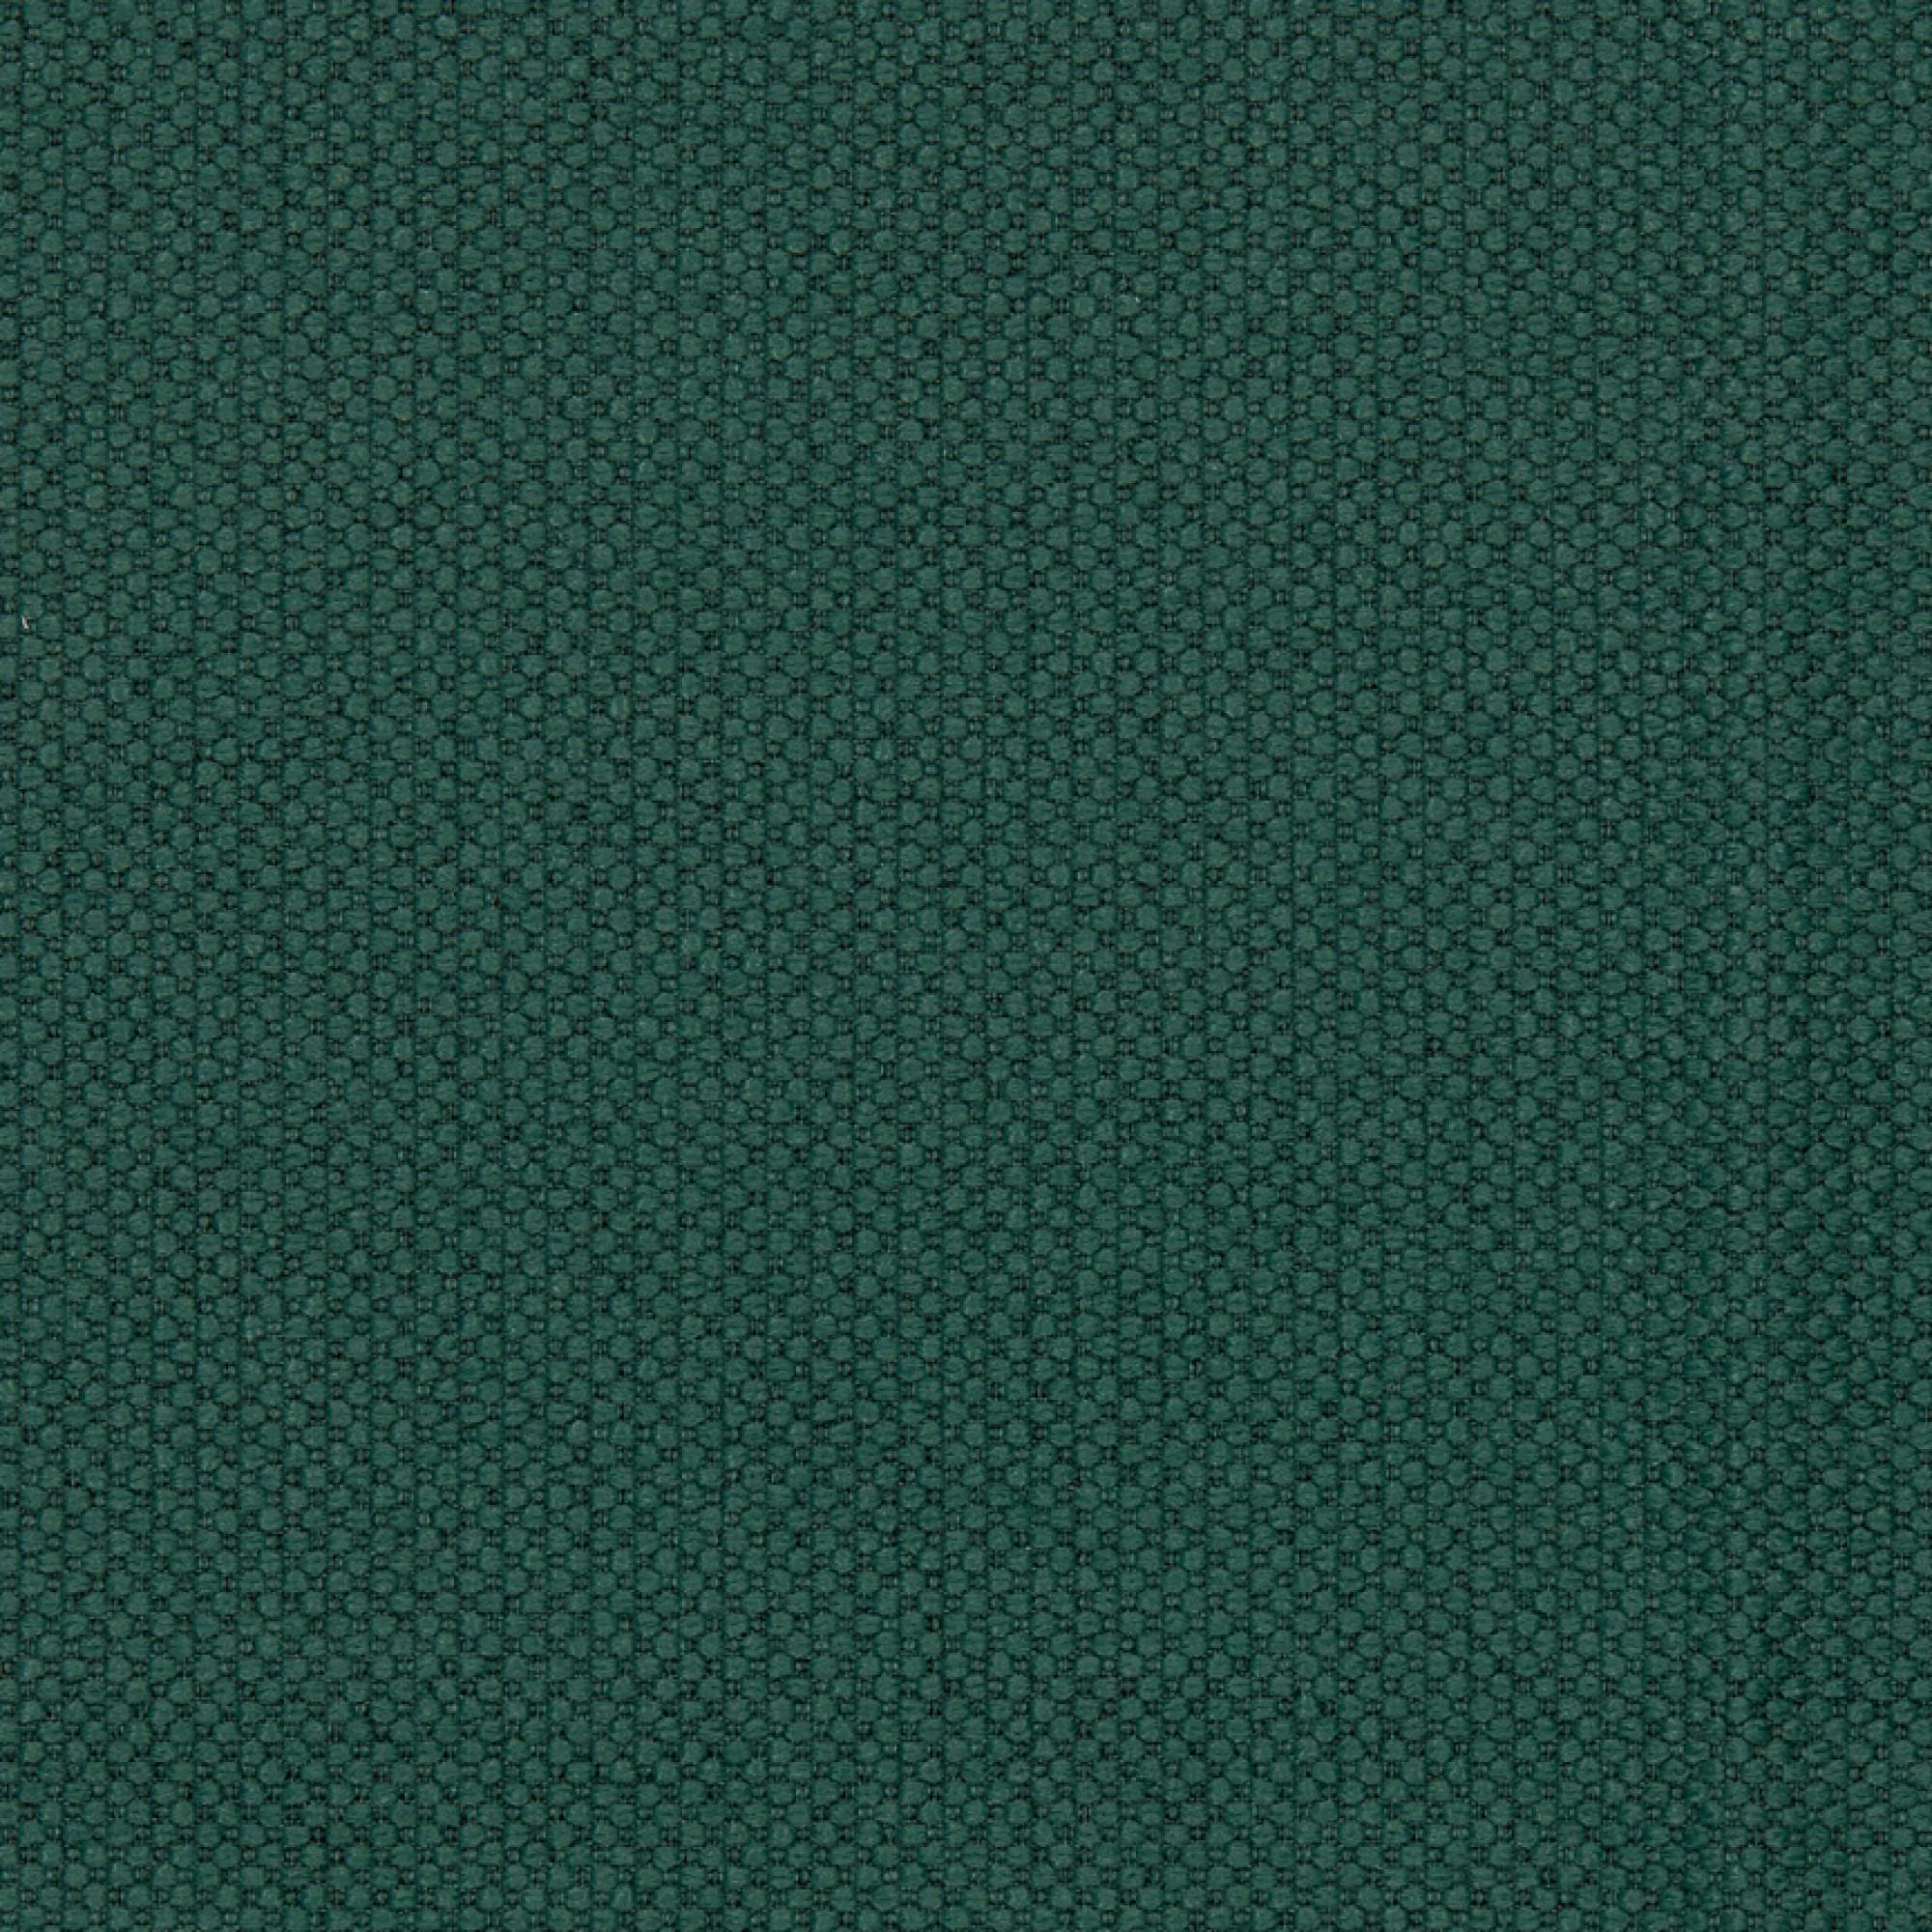 Fabric sample Merit 0019 green